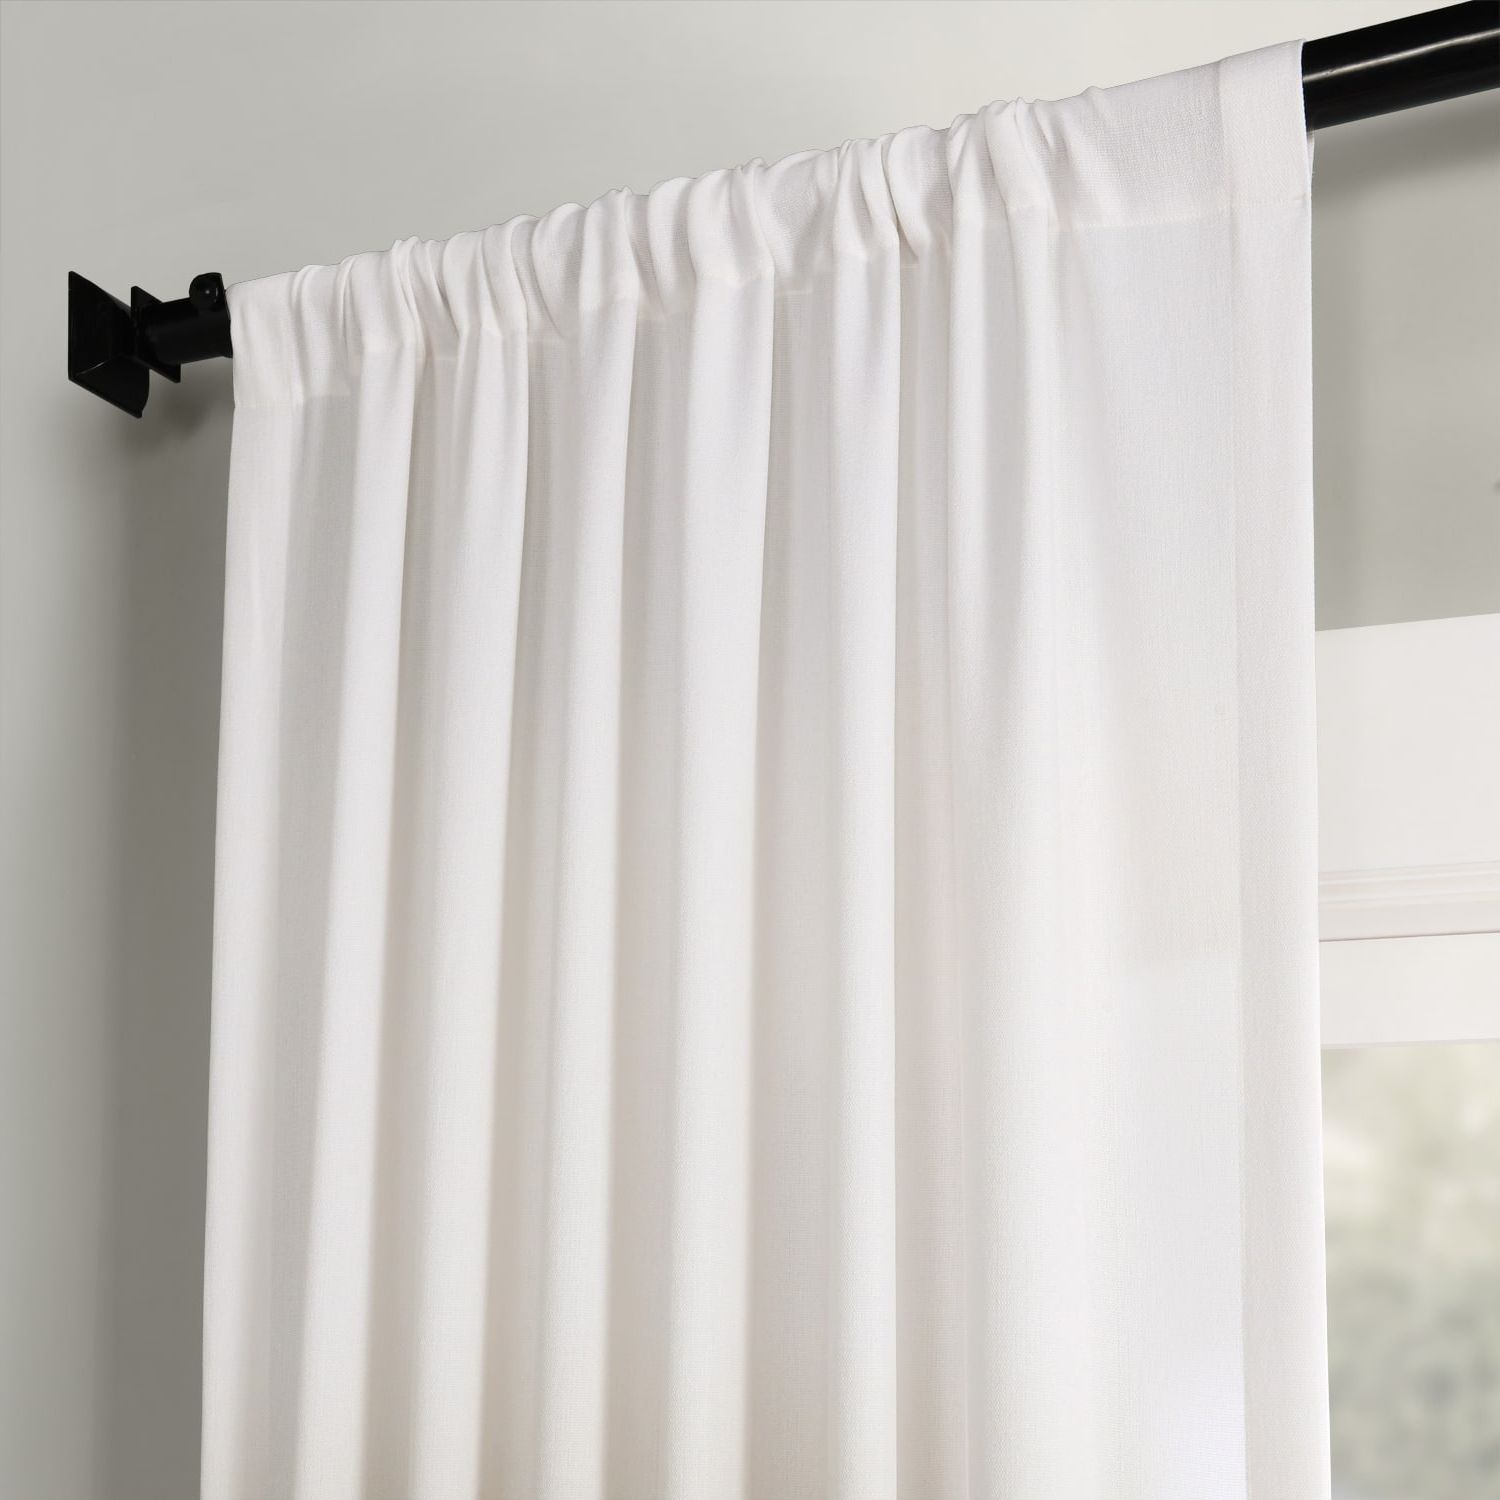 Preferred Ombre Plum Faux Linen Semi Sheer Curtain Inside Ombre Faux Linen Semi Sheer Curtains (View 16 of 20)